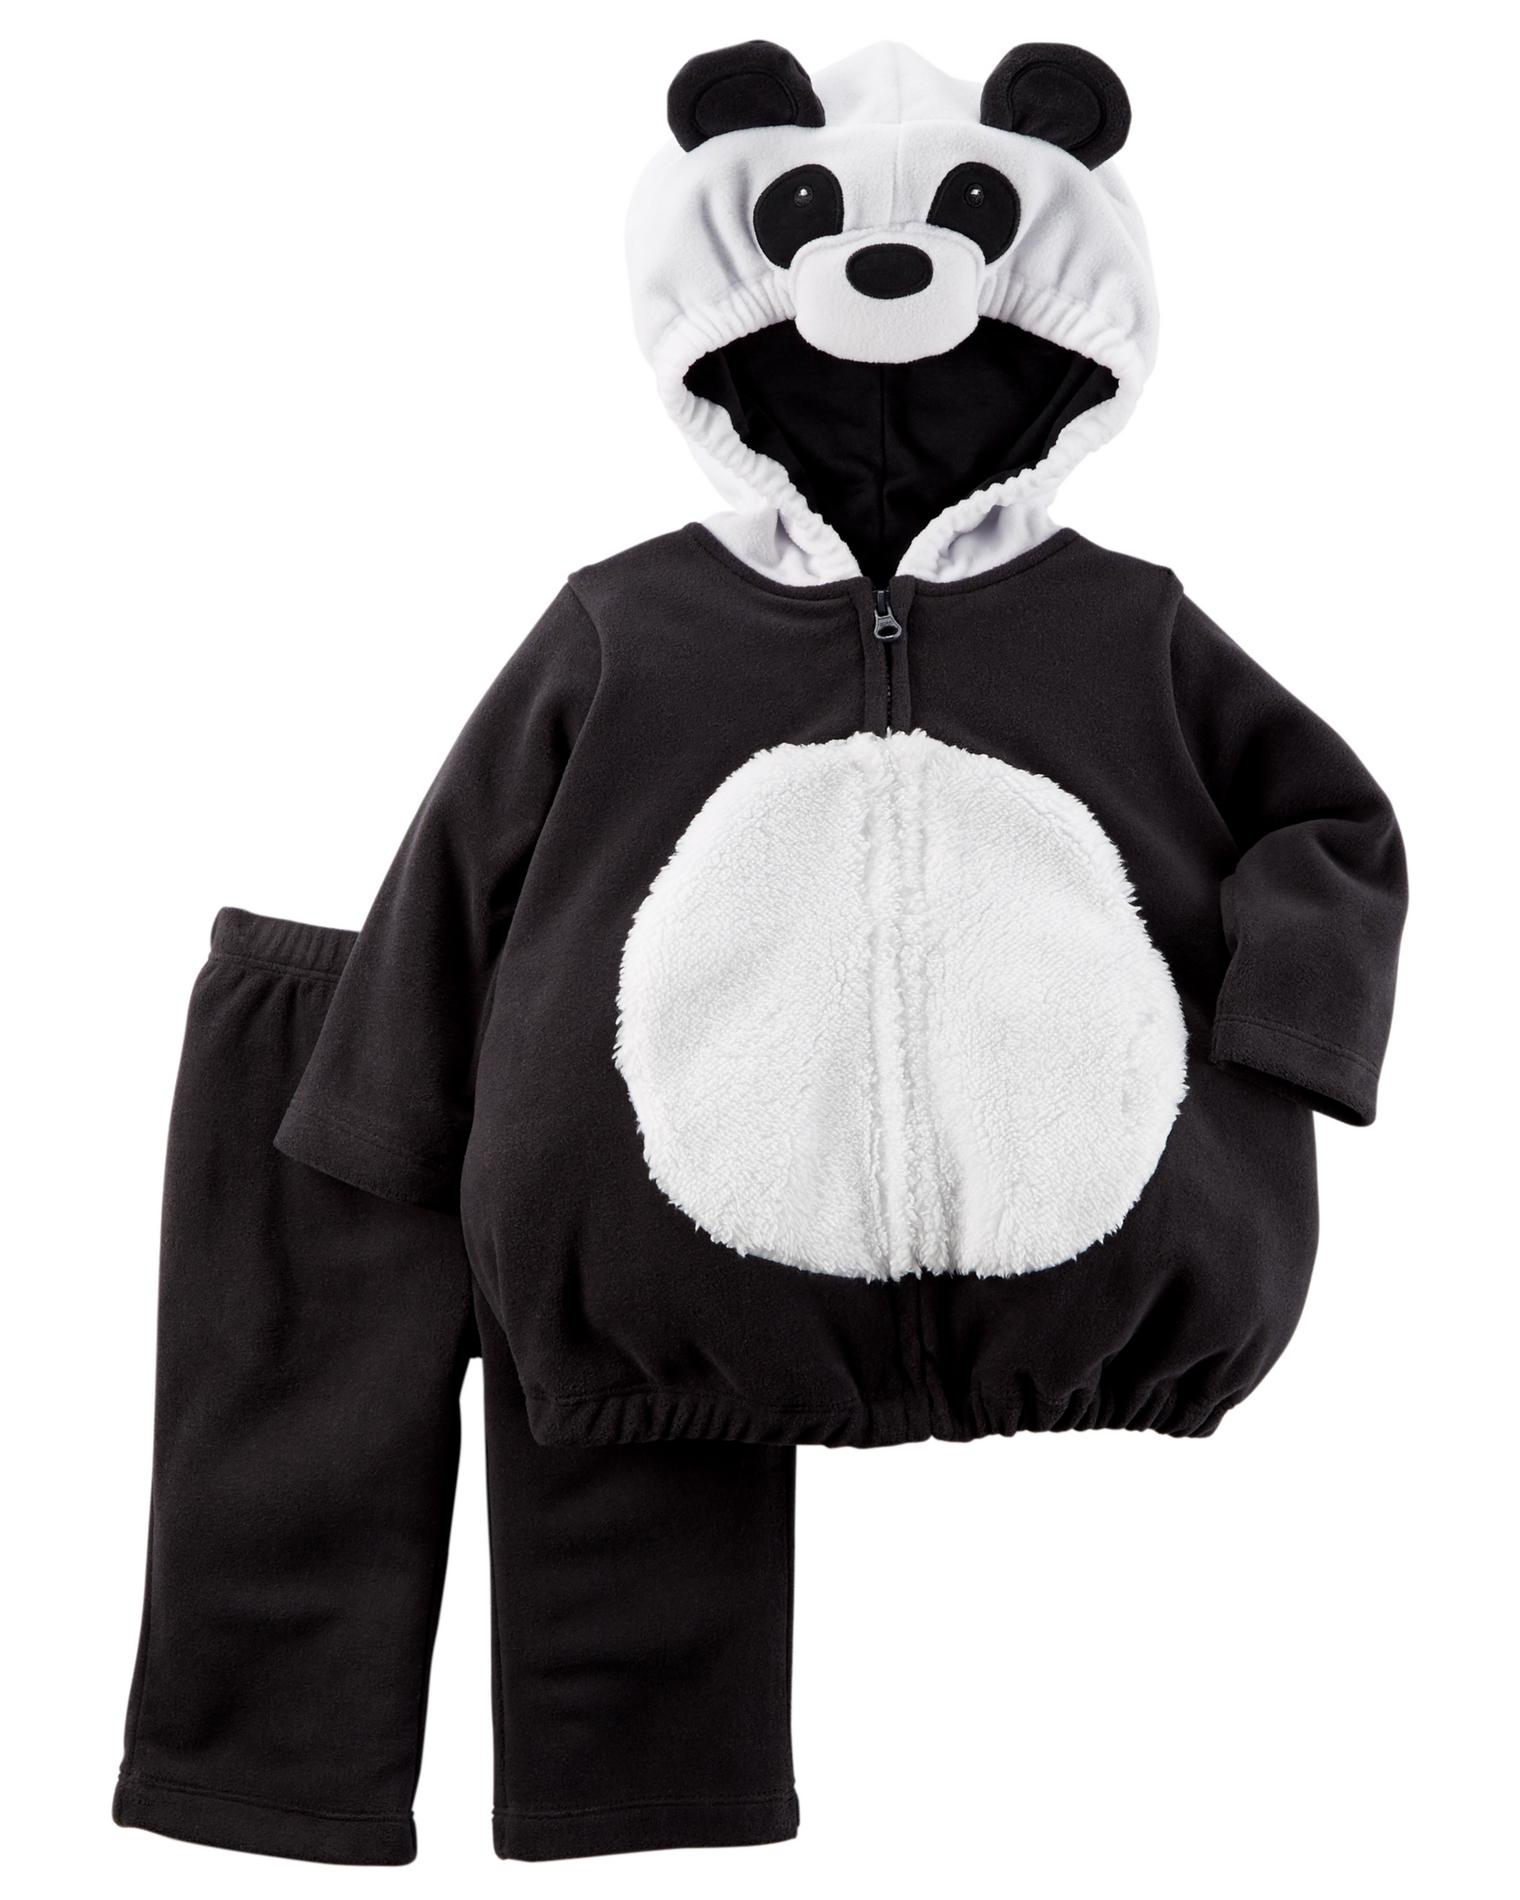 Carter's Newborn & Infants' Halloween Costume - Panda